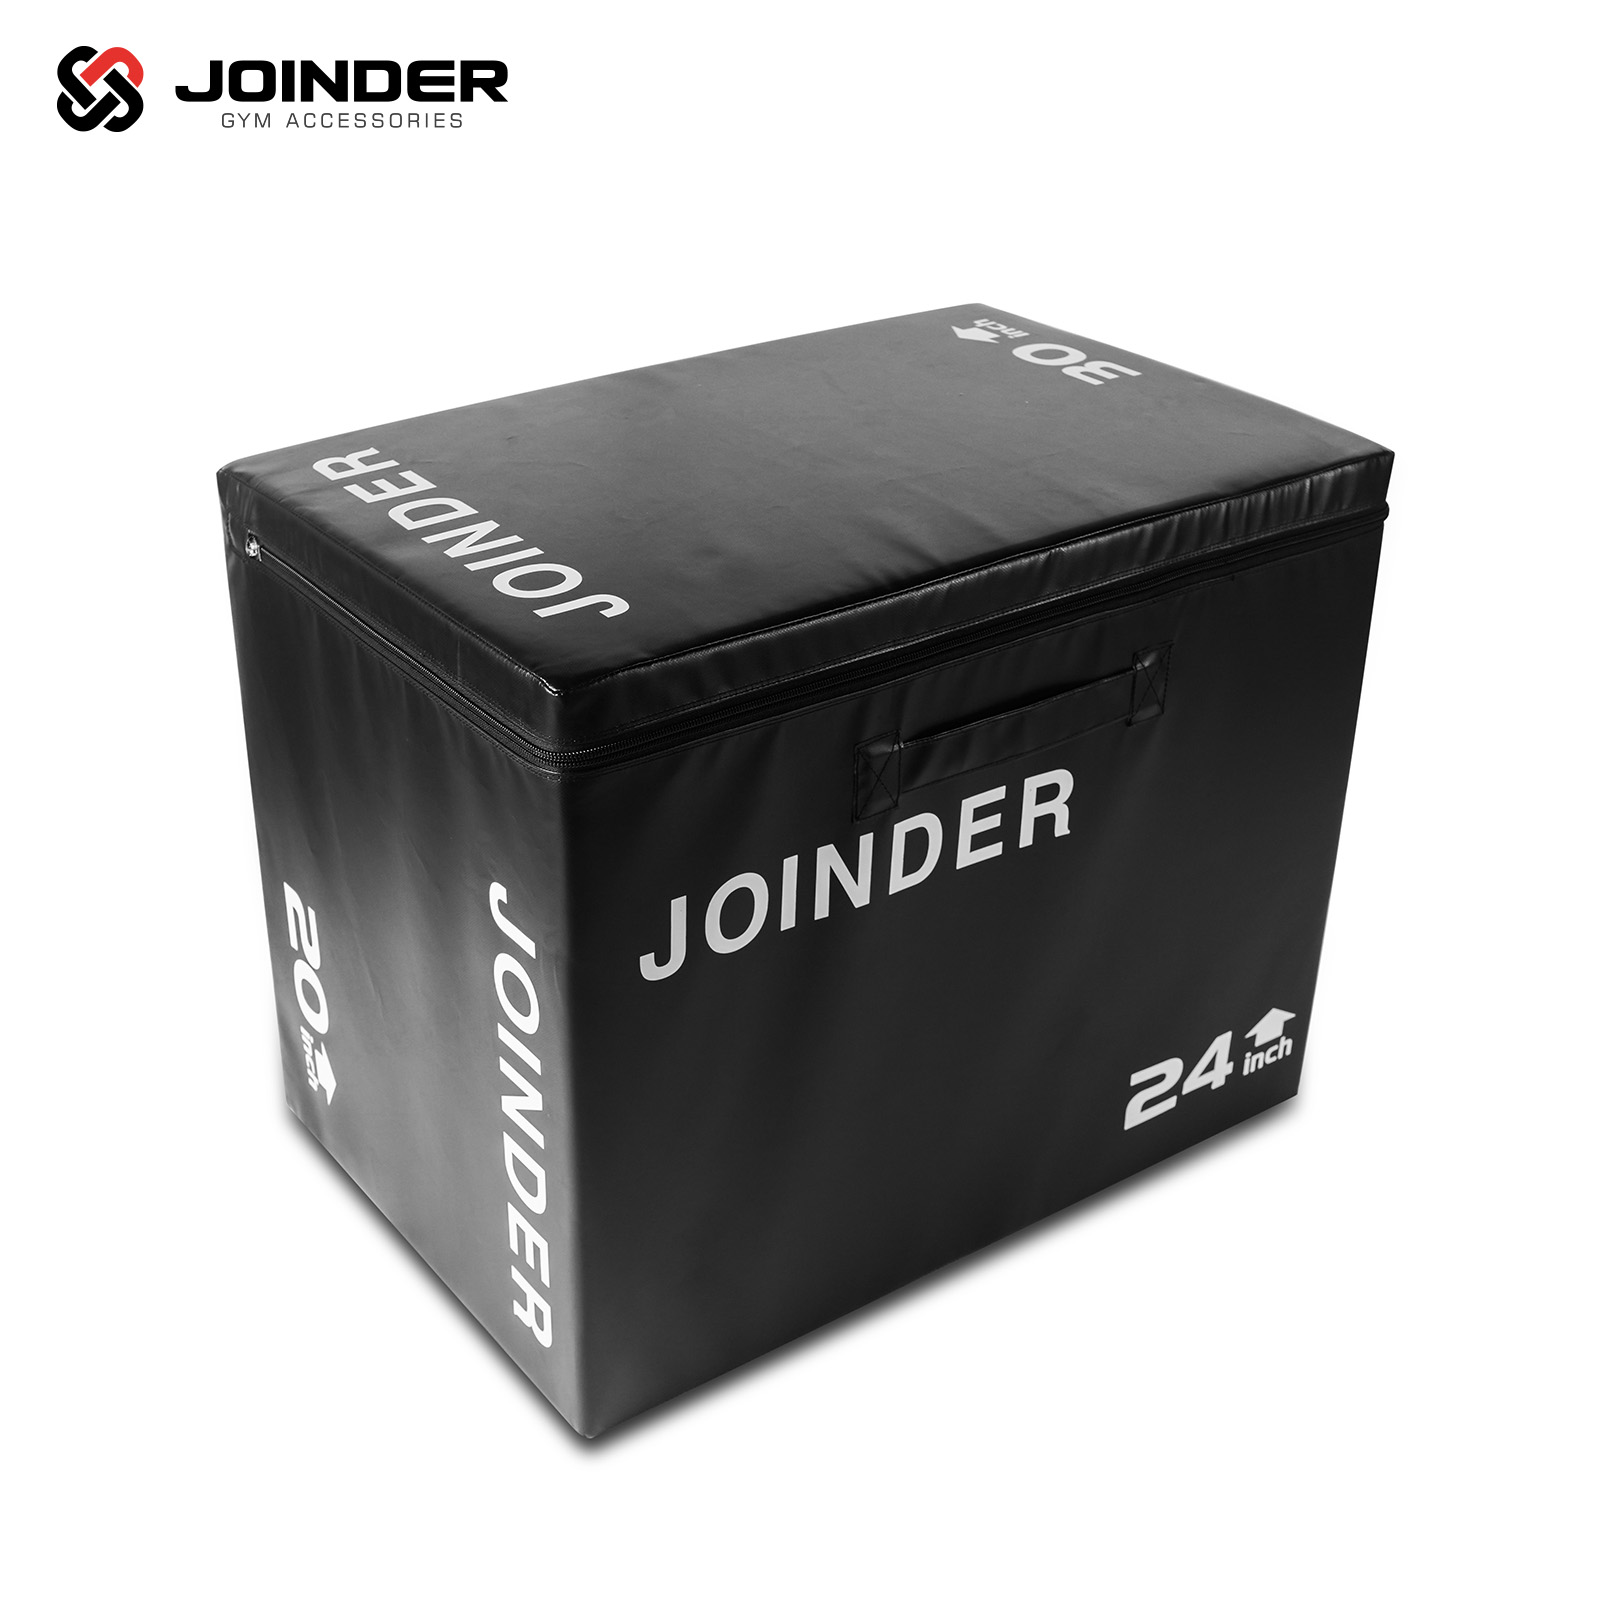 Bục da hỗ trợ tập gym joinder jd8110